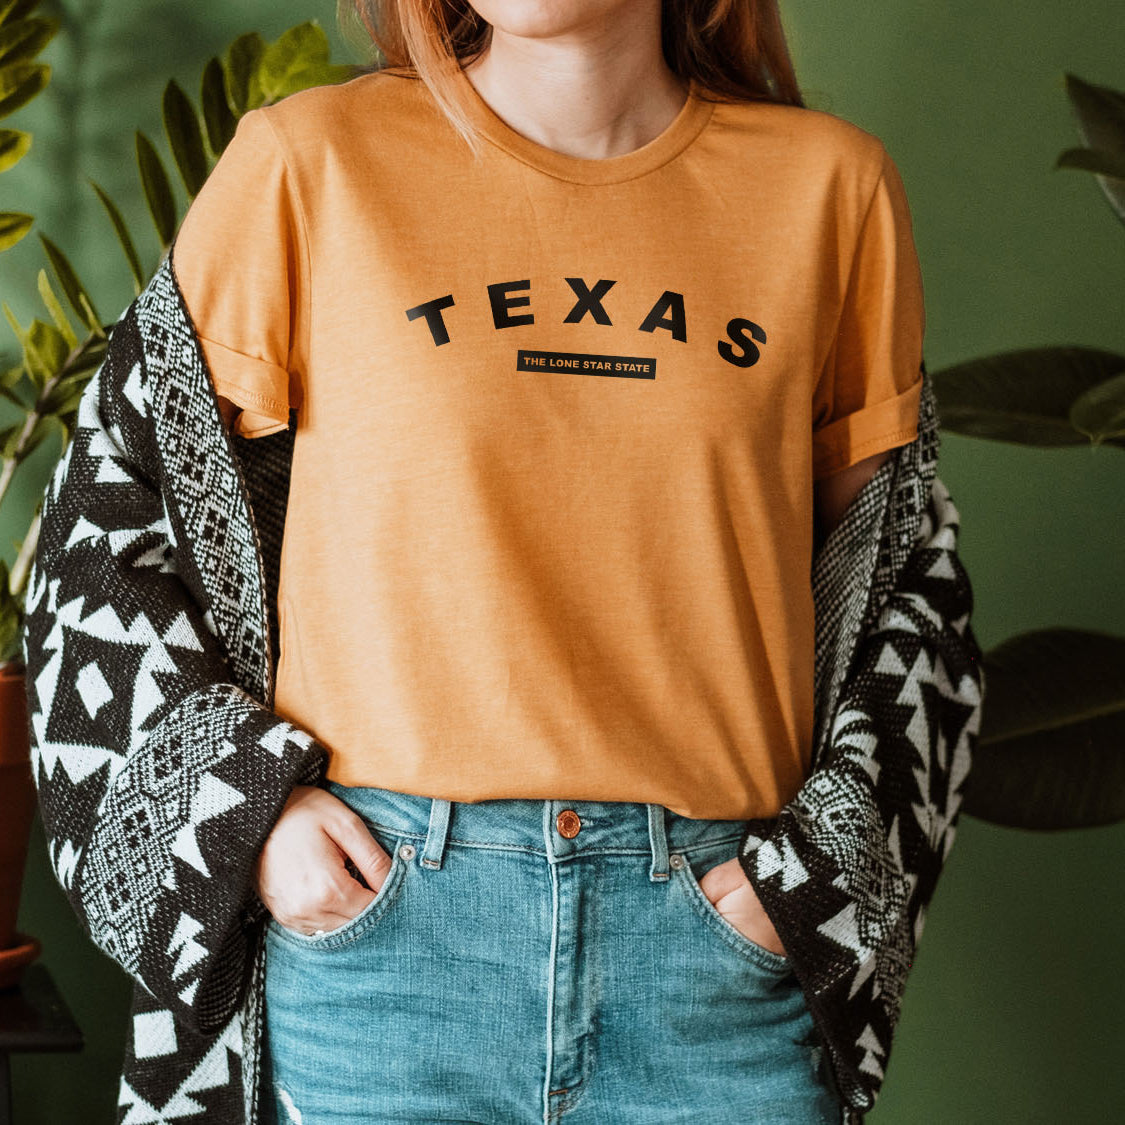 Texas The Lone Star State T-shirt - United States Name & Slogan Minimal Design Printed Tee Shirt